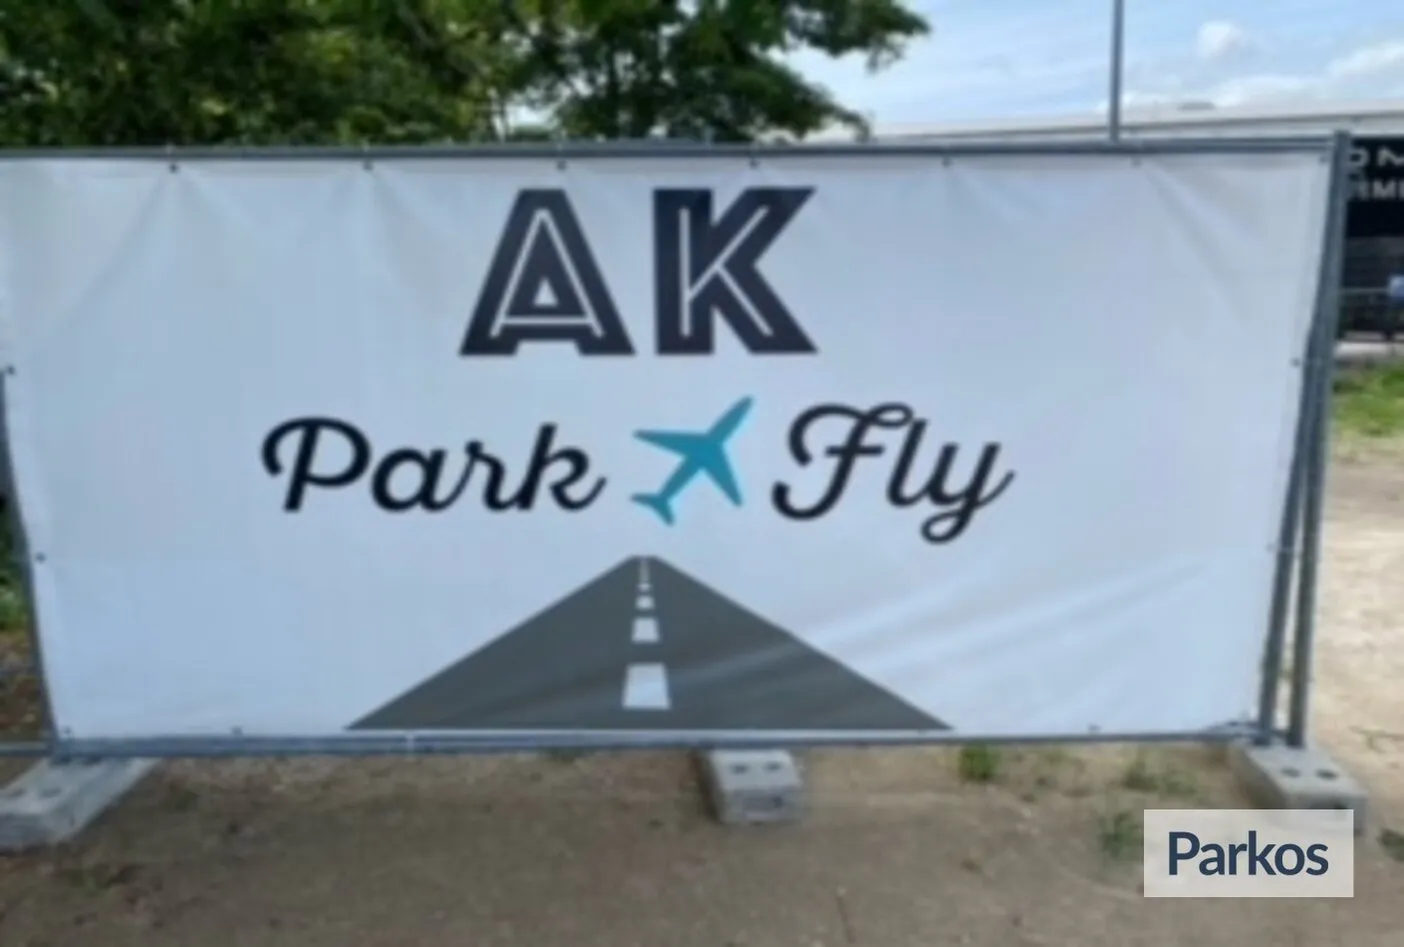 AK Park & Fly - Parkering Hamborg lufthavn - picture 1